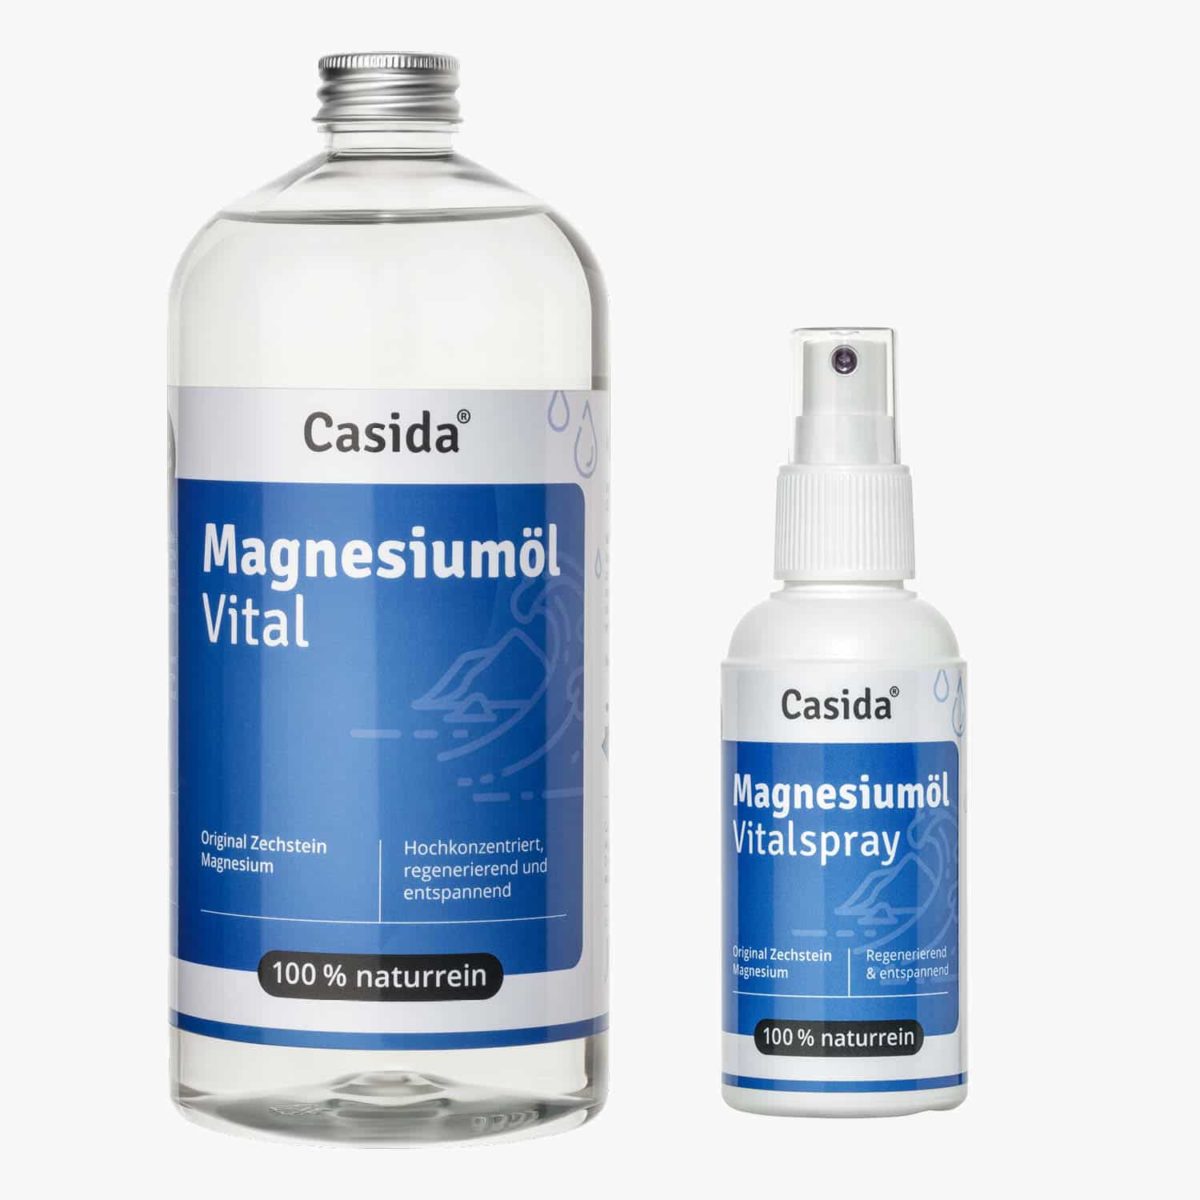 Casida Set Casida Magnesiumöl Vital Zechstein 1000 ml 11730233 PZN 10086741 Apotheke Vorteilsset Rabatt Bundle Regeneration Muskeln Sport Verspannung